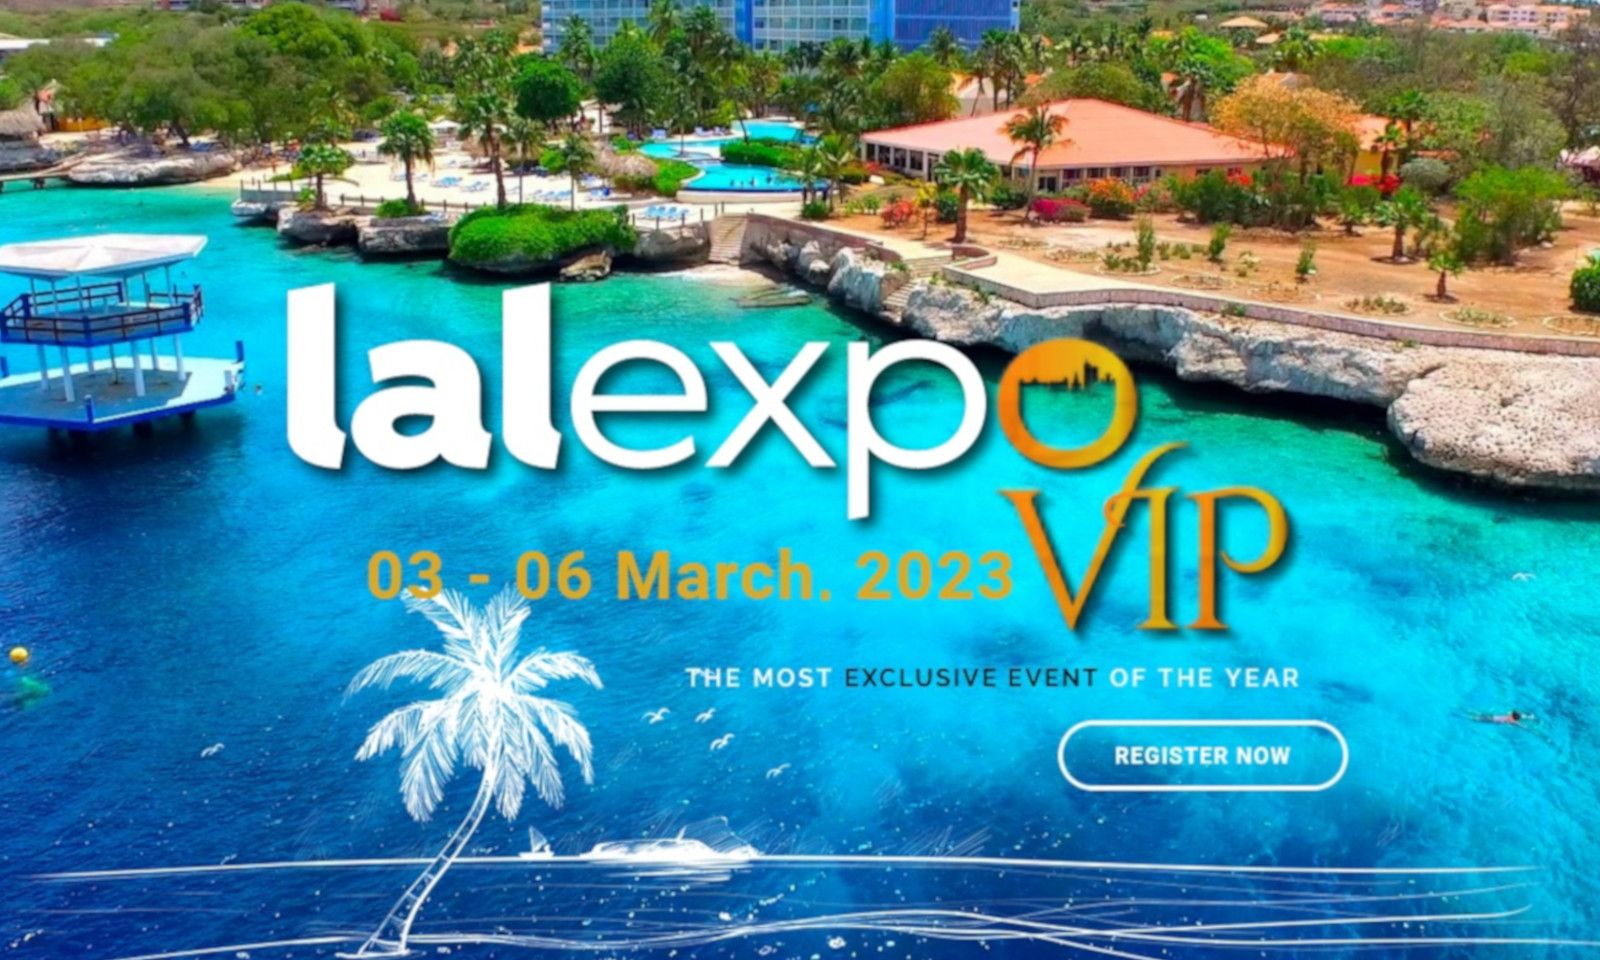 Chaturbate Named Presenting Sponsor of LALExpo VIP